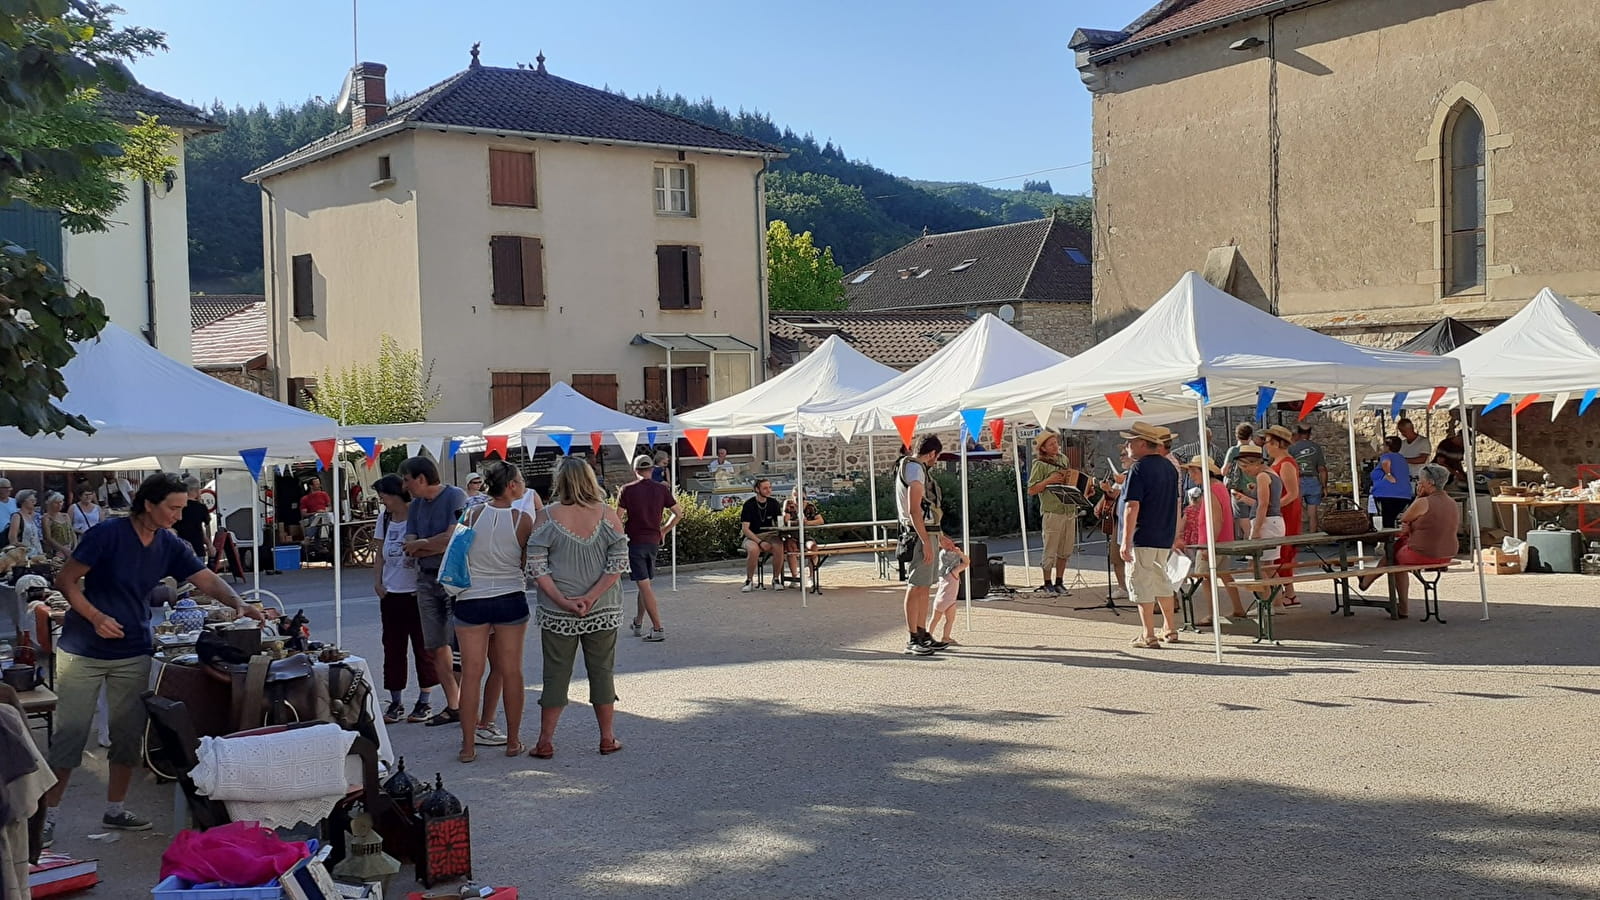 P'tit marché de Bourgvilain - Markt mit lokalen / biologischen Erzeugern